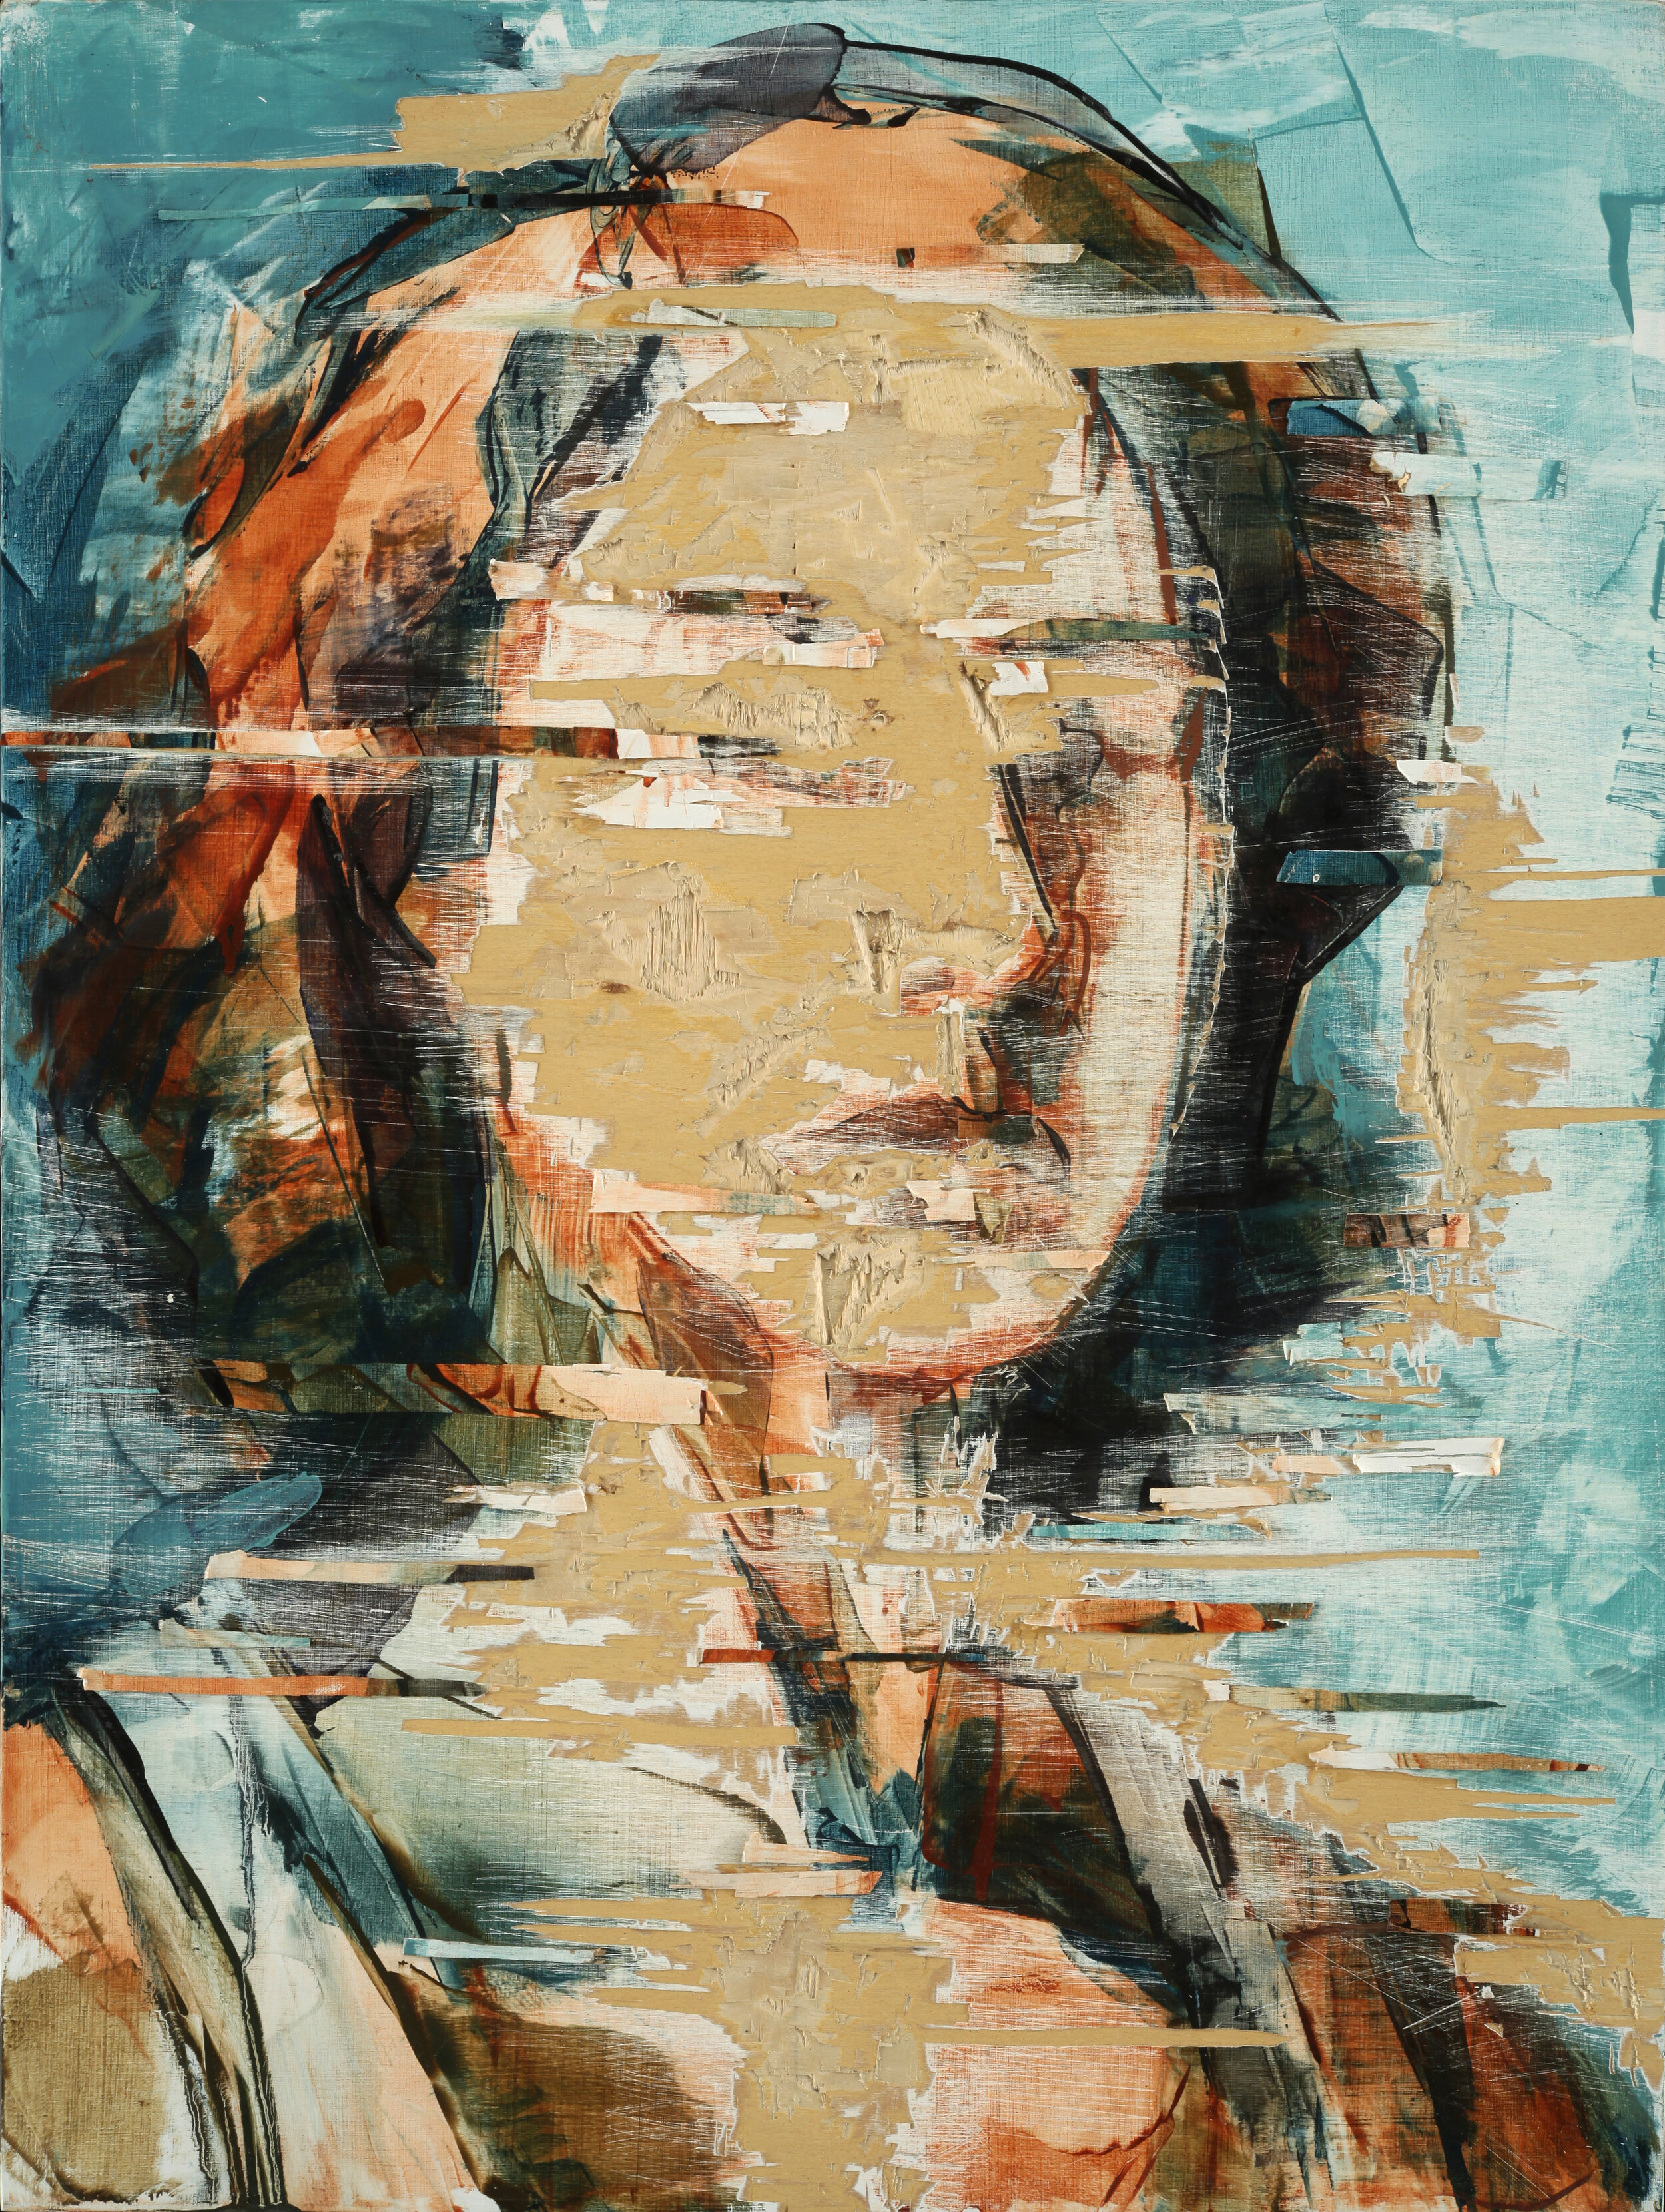   Self Portrait  2019 Oil on panel 24" x 18" 